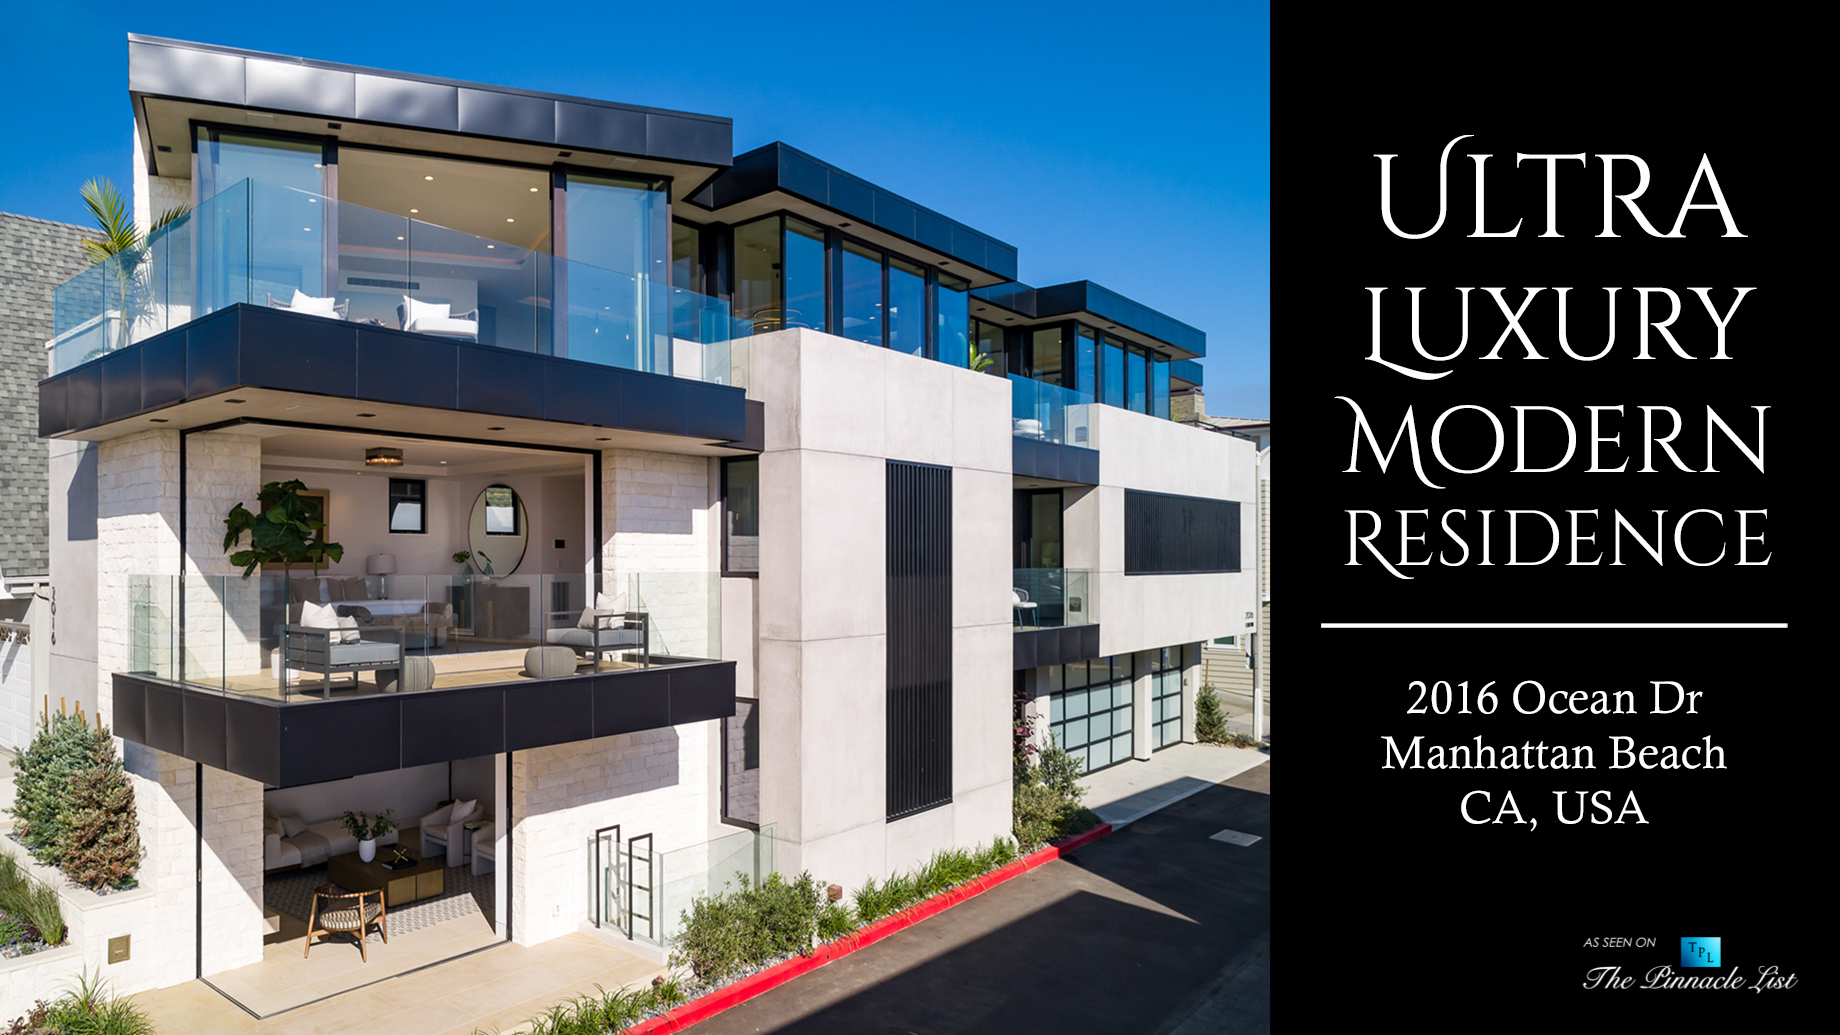 Ultra Modern Luxury Residence - 2016 Ocean Dr, Manhattan Beach, CA, USA